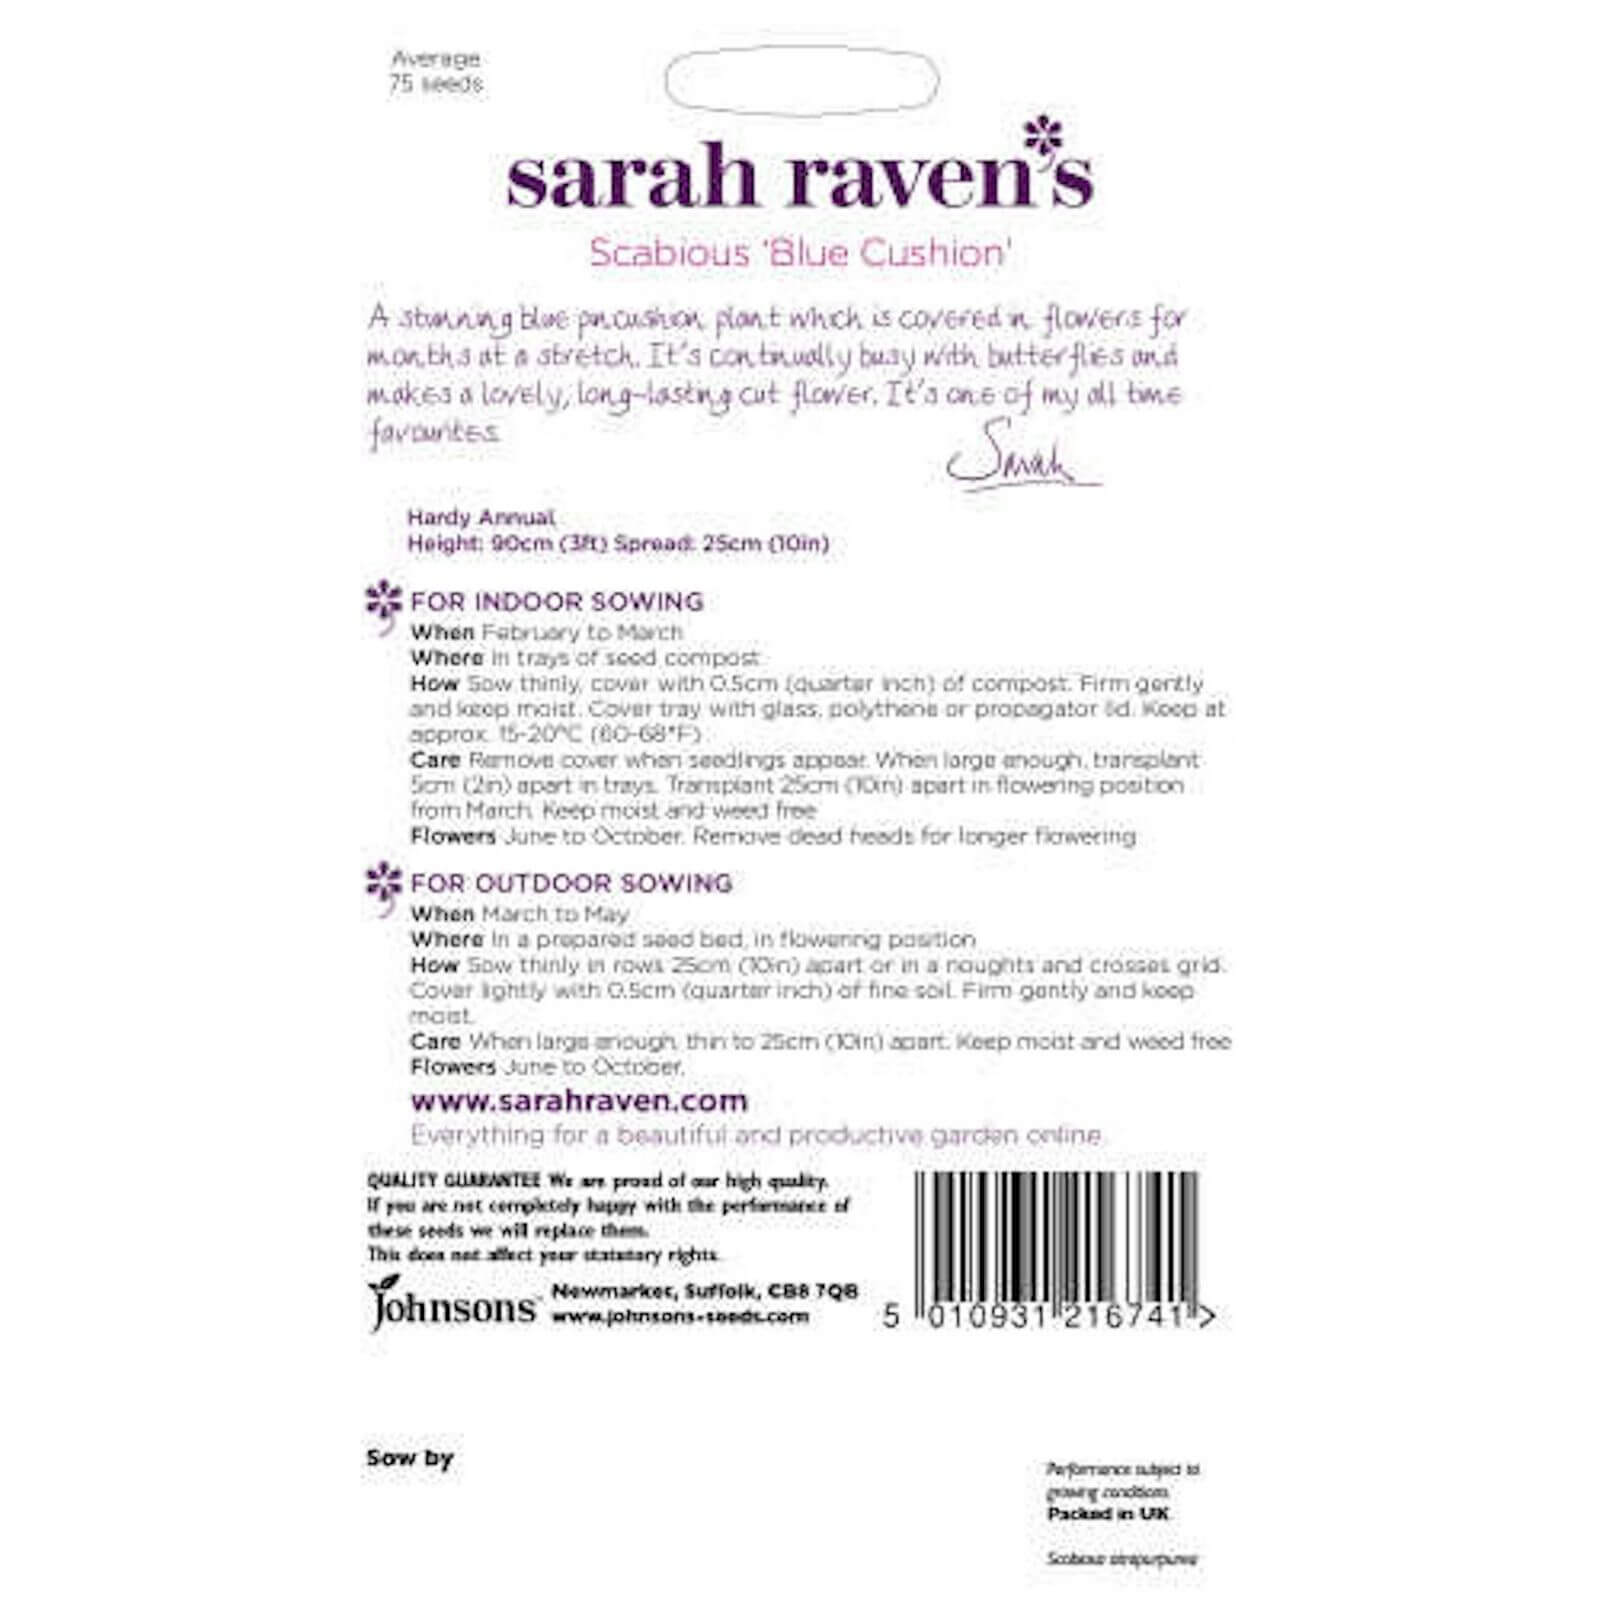 Sarah Ravens Scabious Blue Cushion Seeds